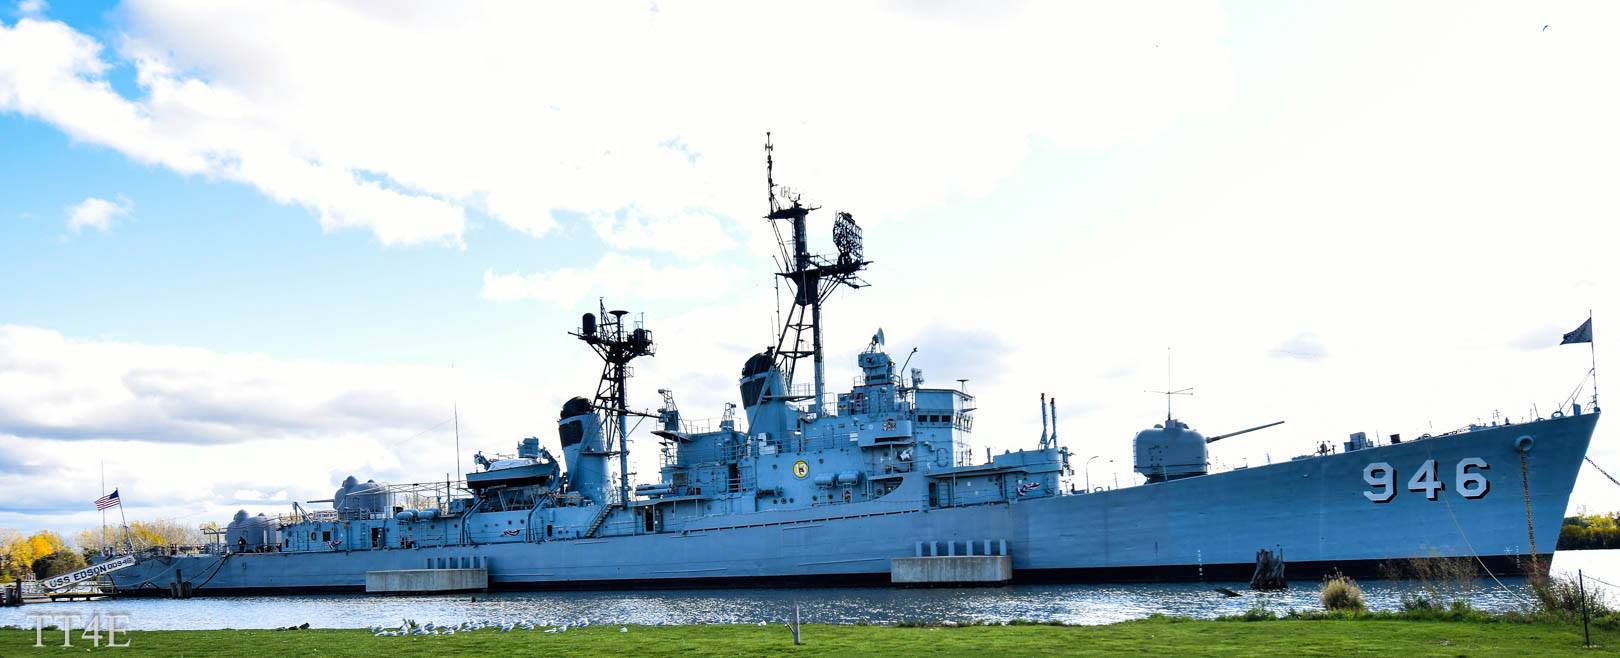 USS EDSON - DOCKED BC